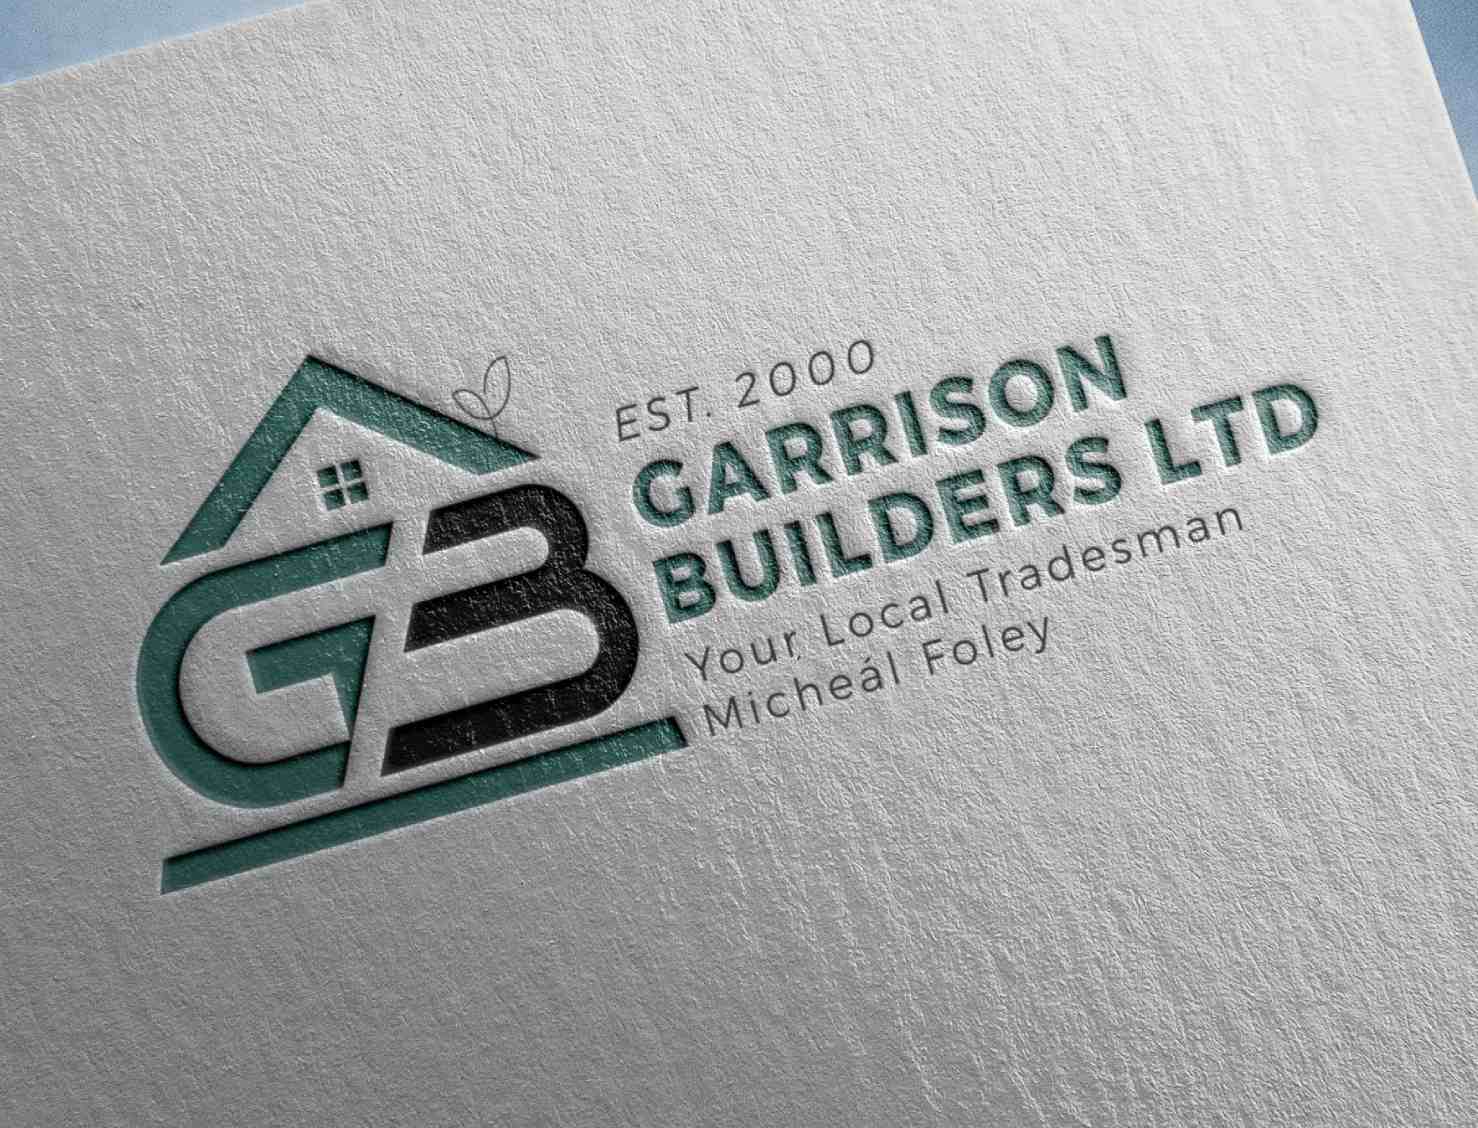 Garrison Builders